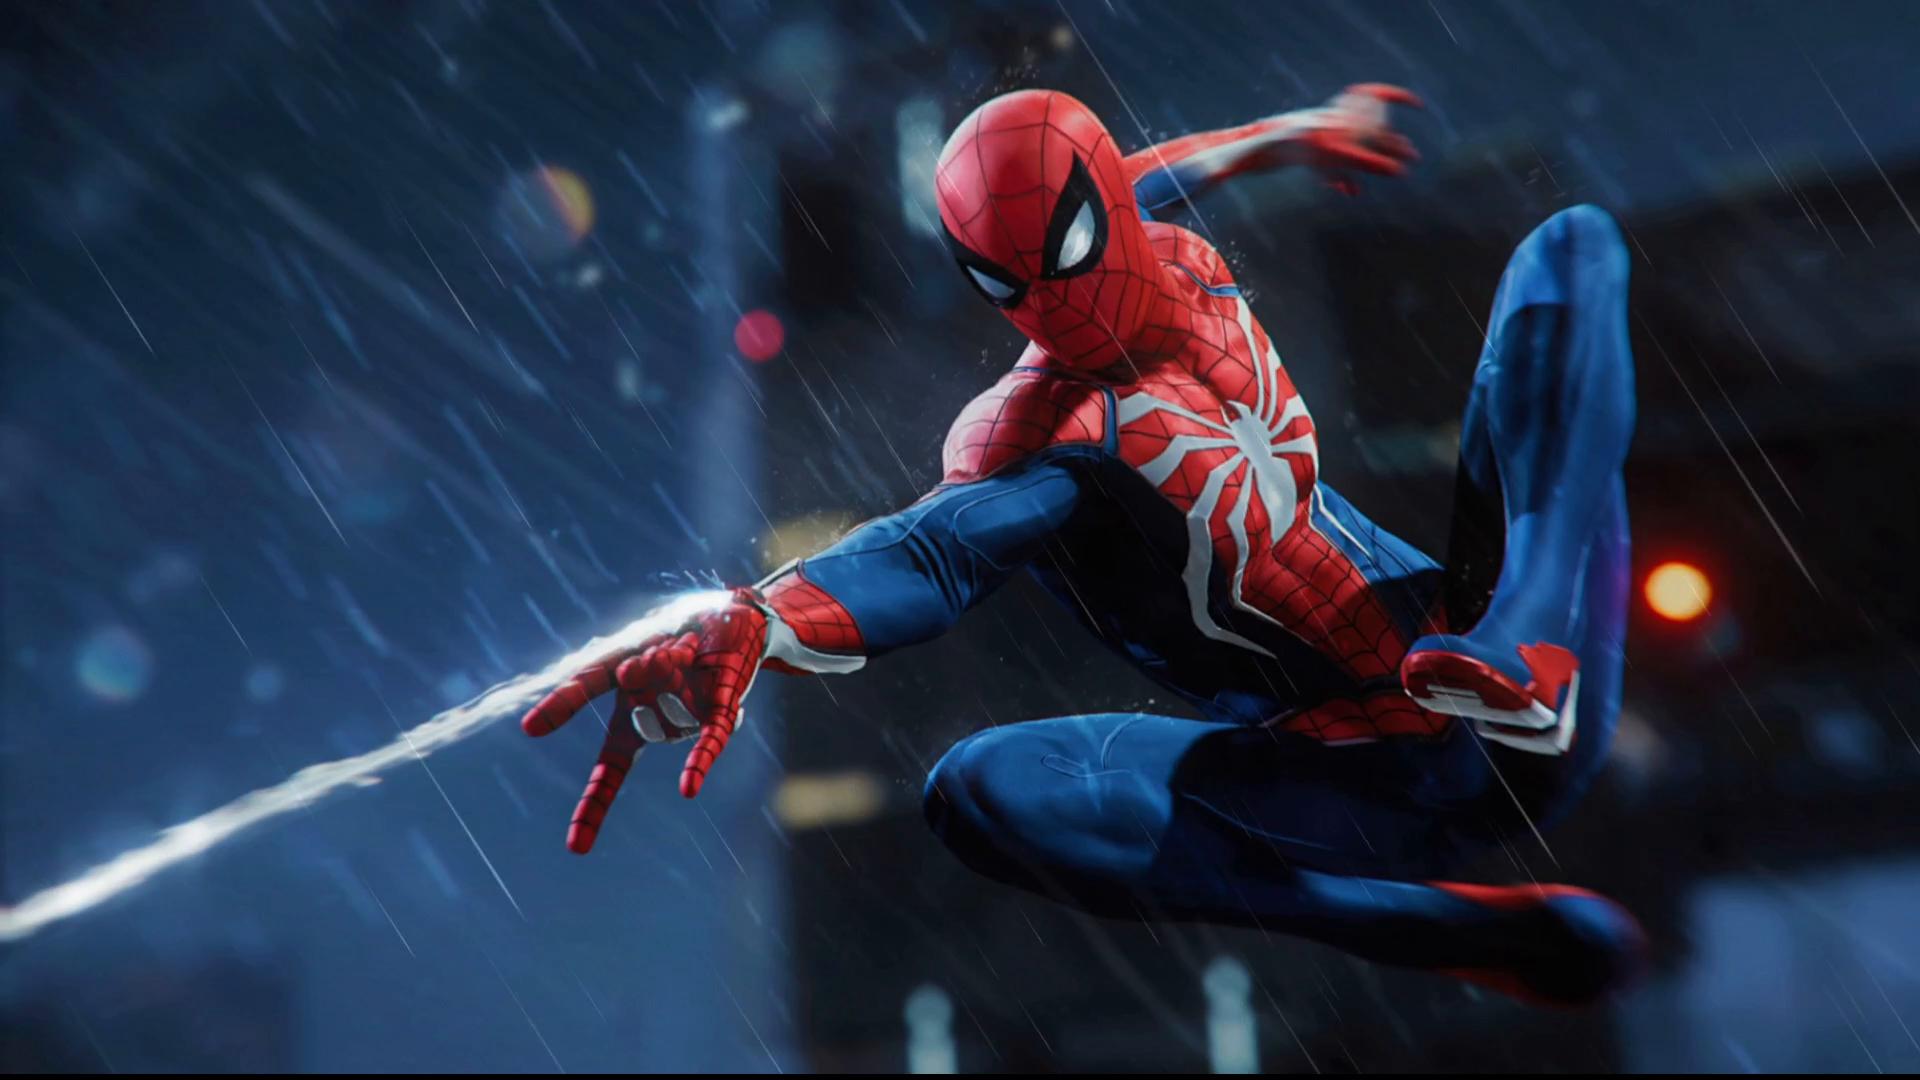 Spiderman | Marvel comics wallpaper, Marvel spiderman, Marvel heroes